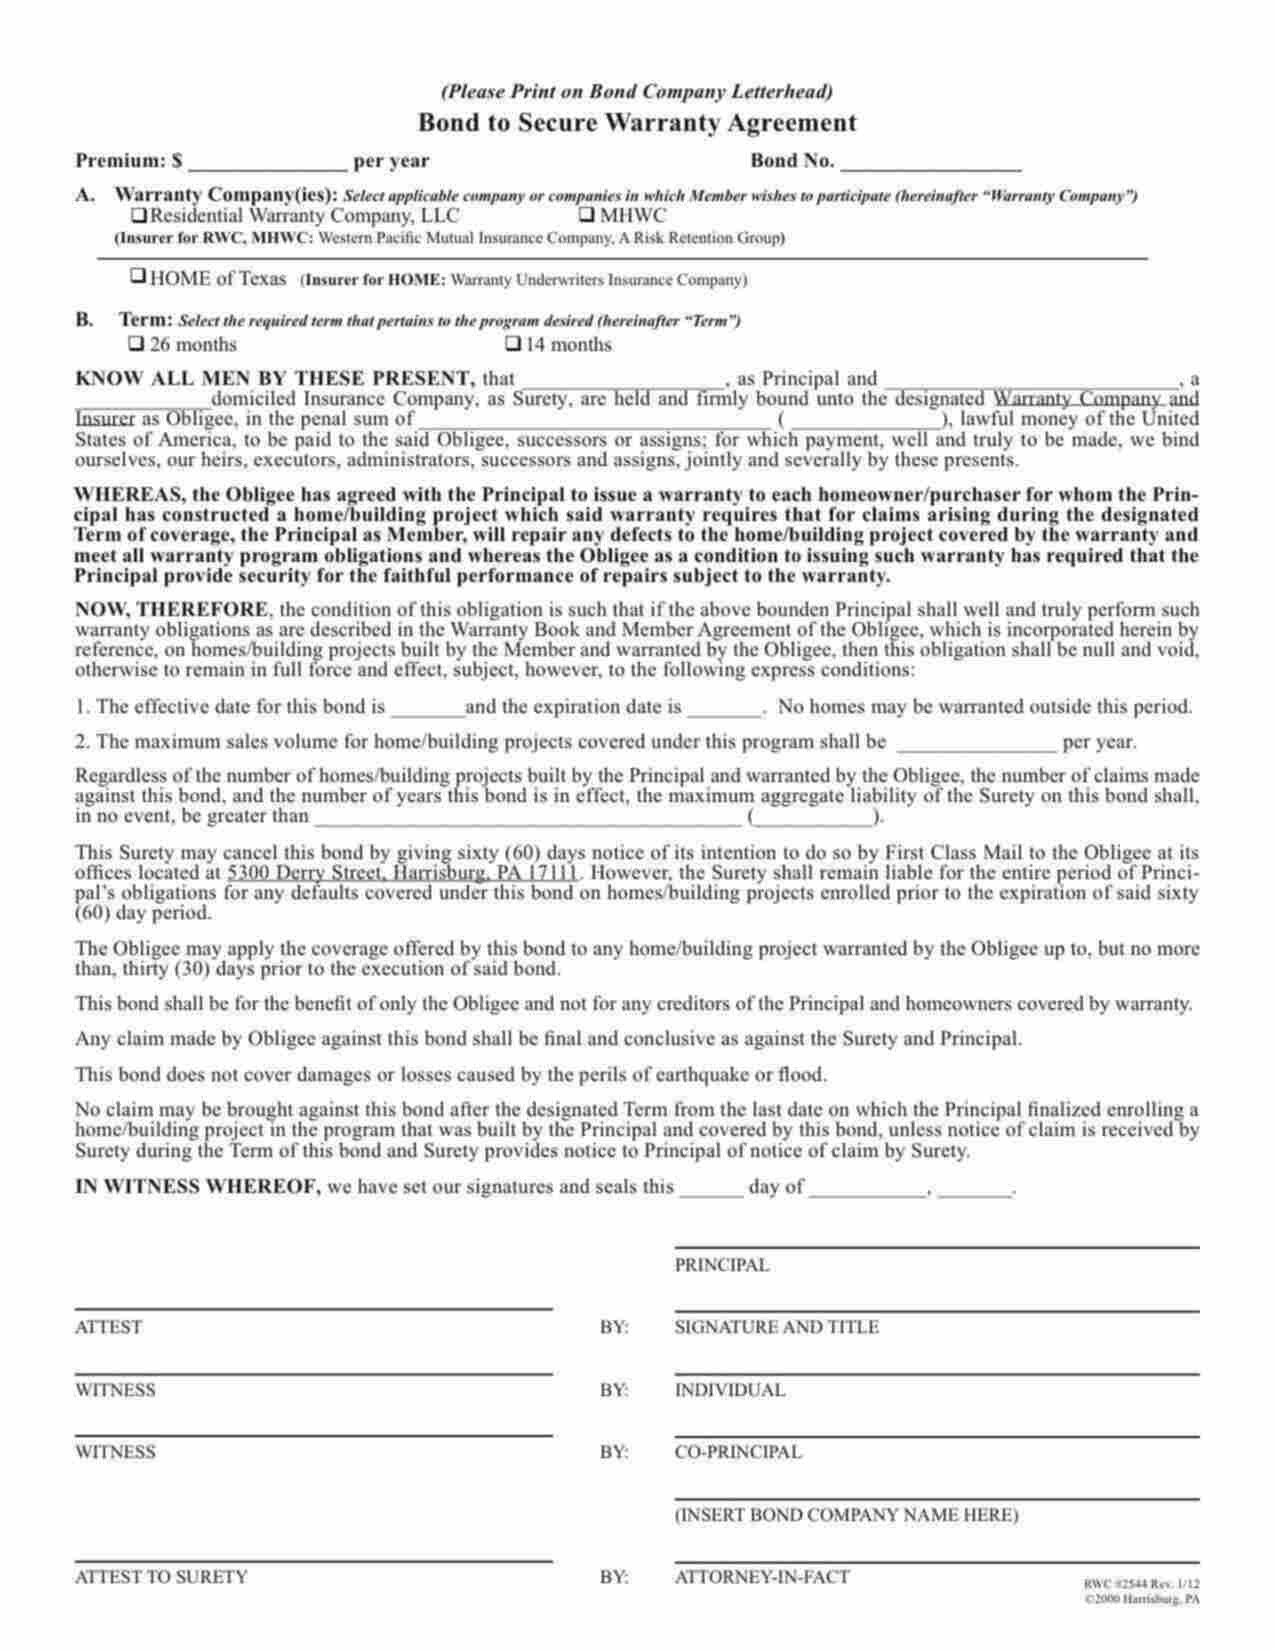 Pennsylvania Warranty Agreement (14 months) Bond Form